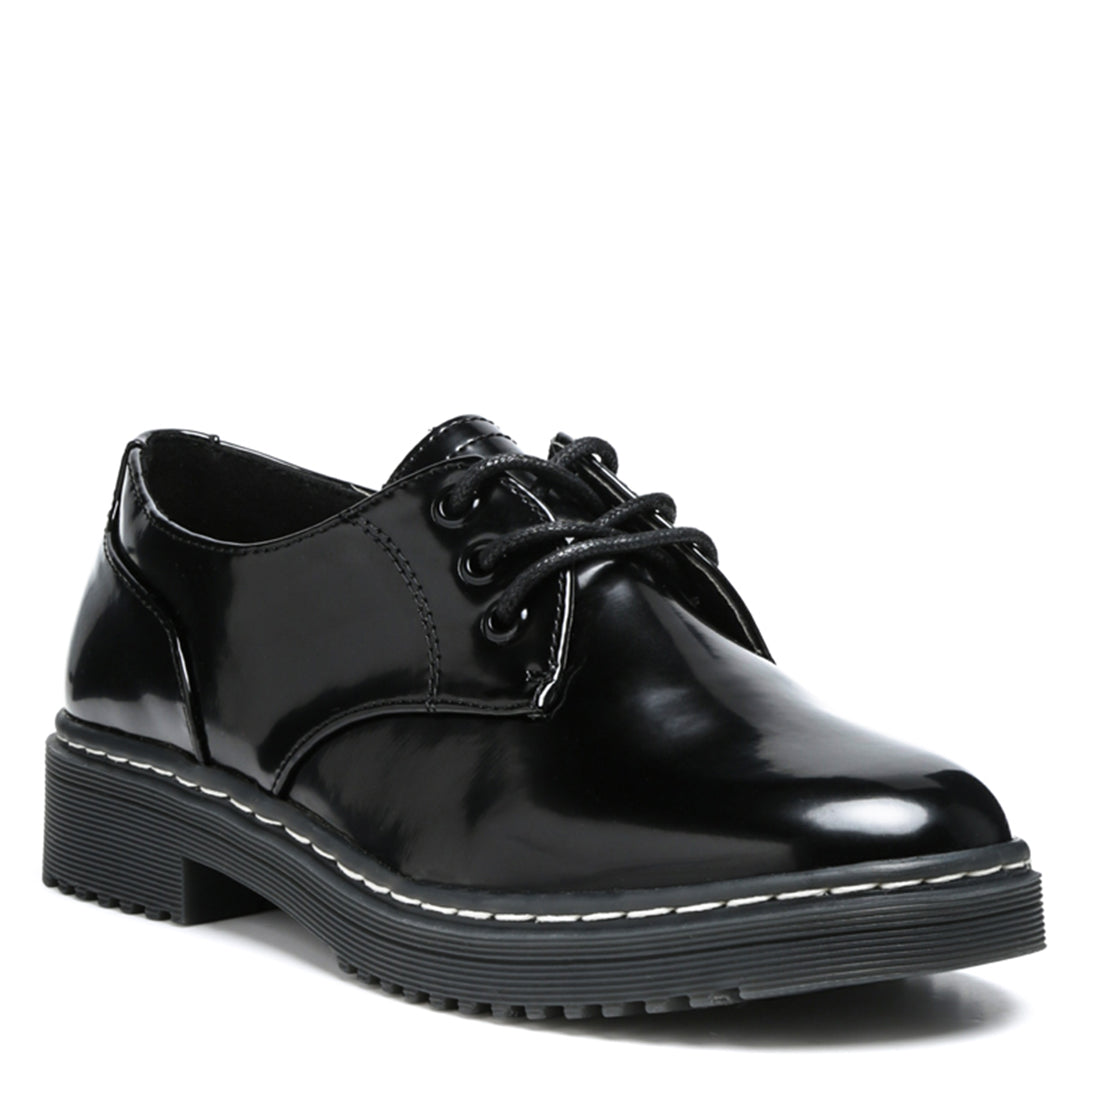 Black Shanks Oxford Patent PU Shoes - UK3